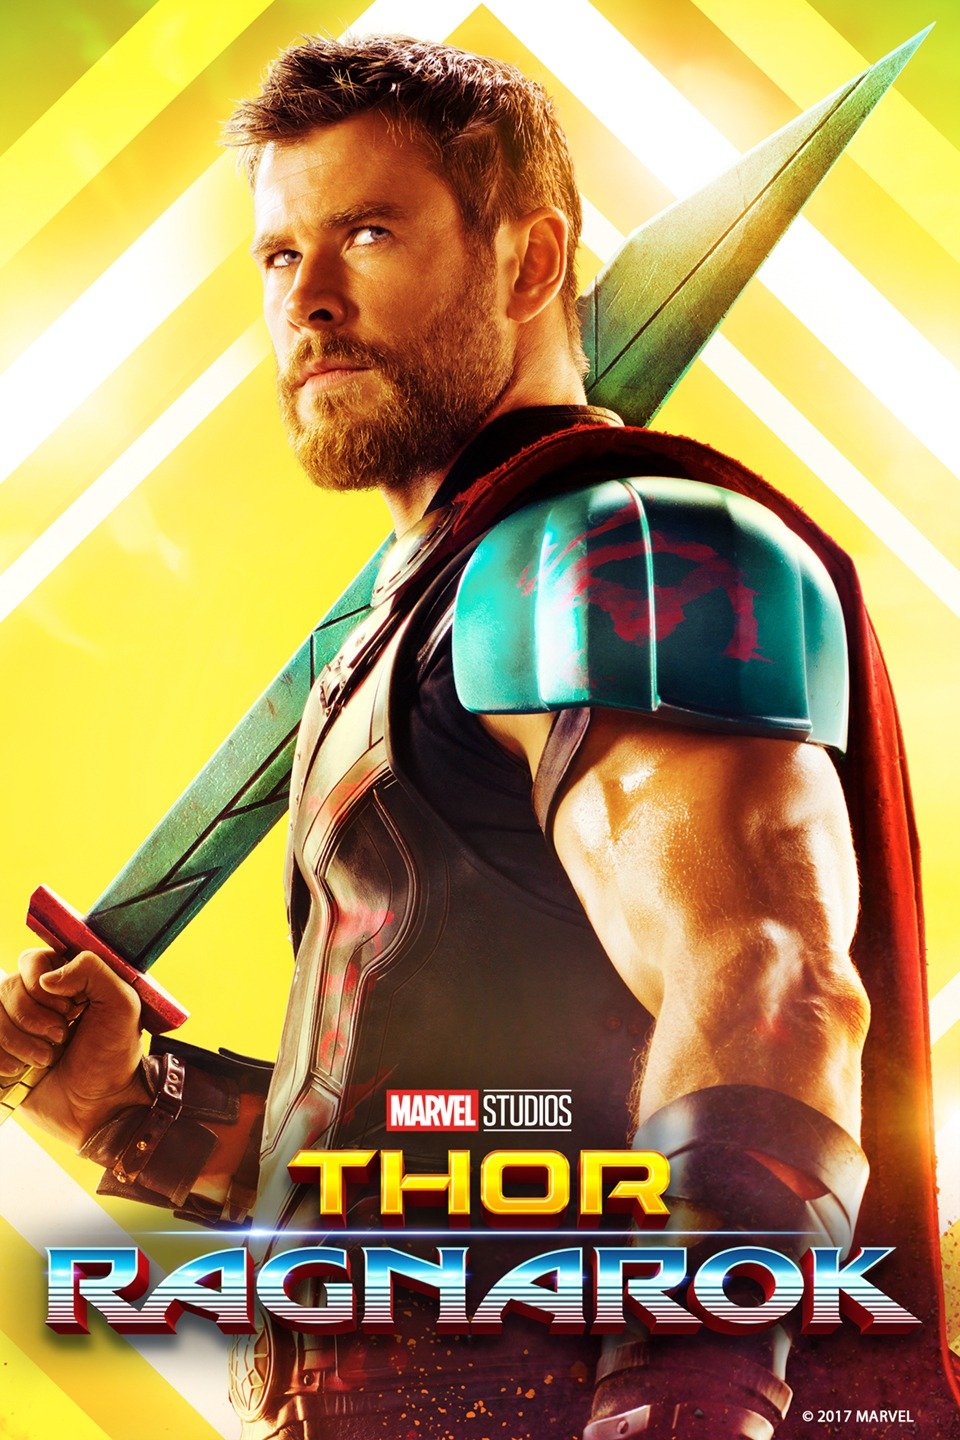 [MINI Super-HQ] Thor: Ragnarok (2017) ศึกอวสานเทพเจ้า [1080p] [พากย์ไทย 5.1 แท้ 640 kbps + เสียงอังกฤษ DTS] [บรรยายไทย + อังกฤษ] [เสียงไทย + ซับไทย] [ONE2UP]